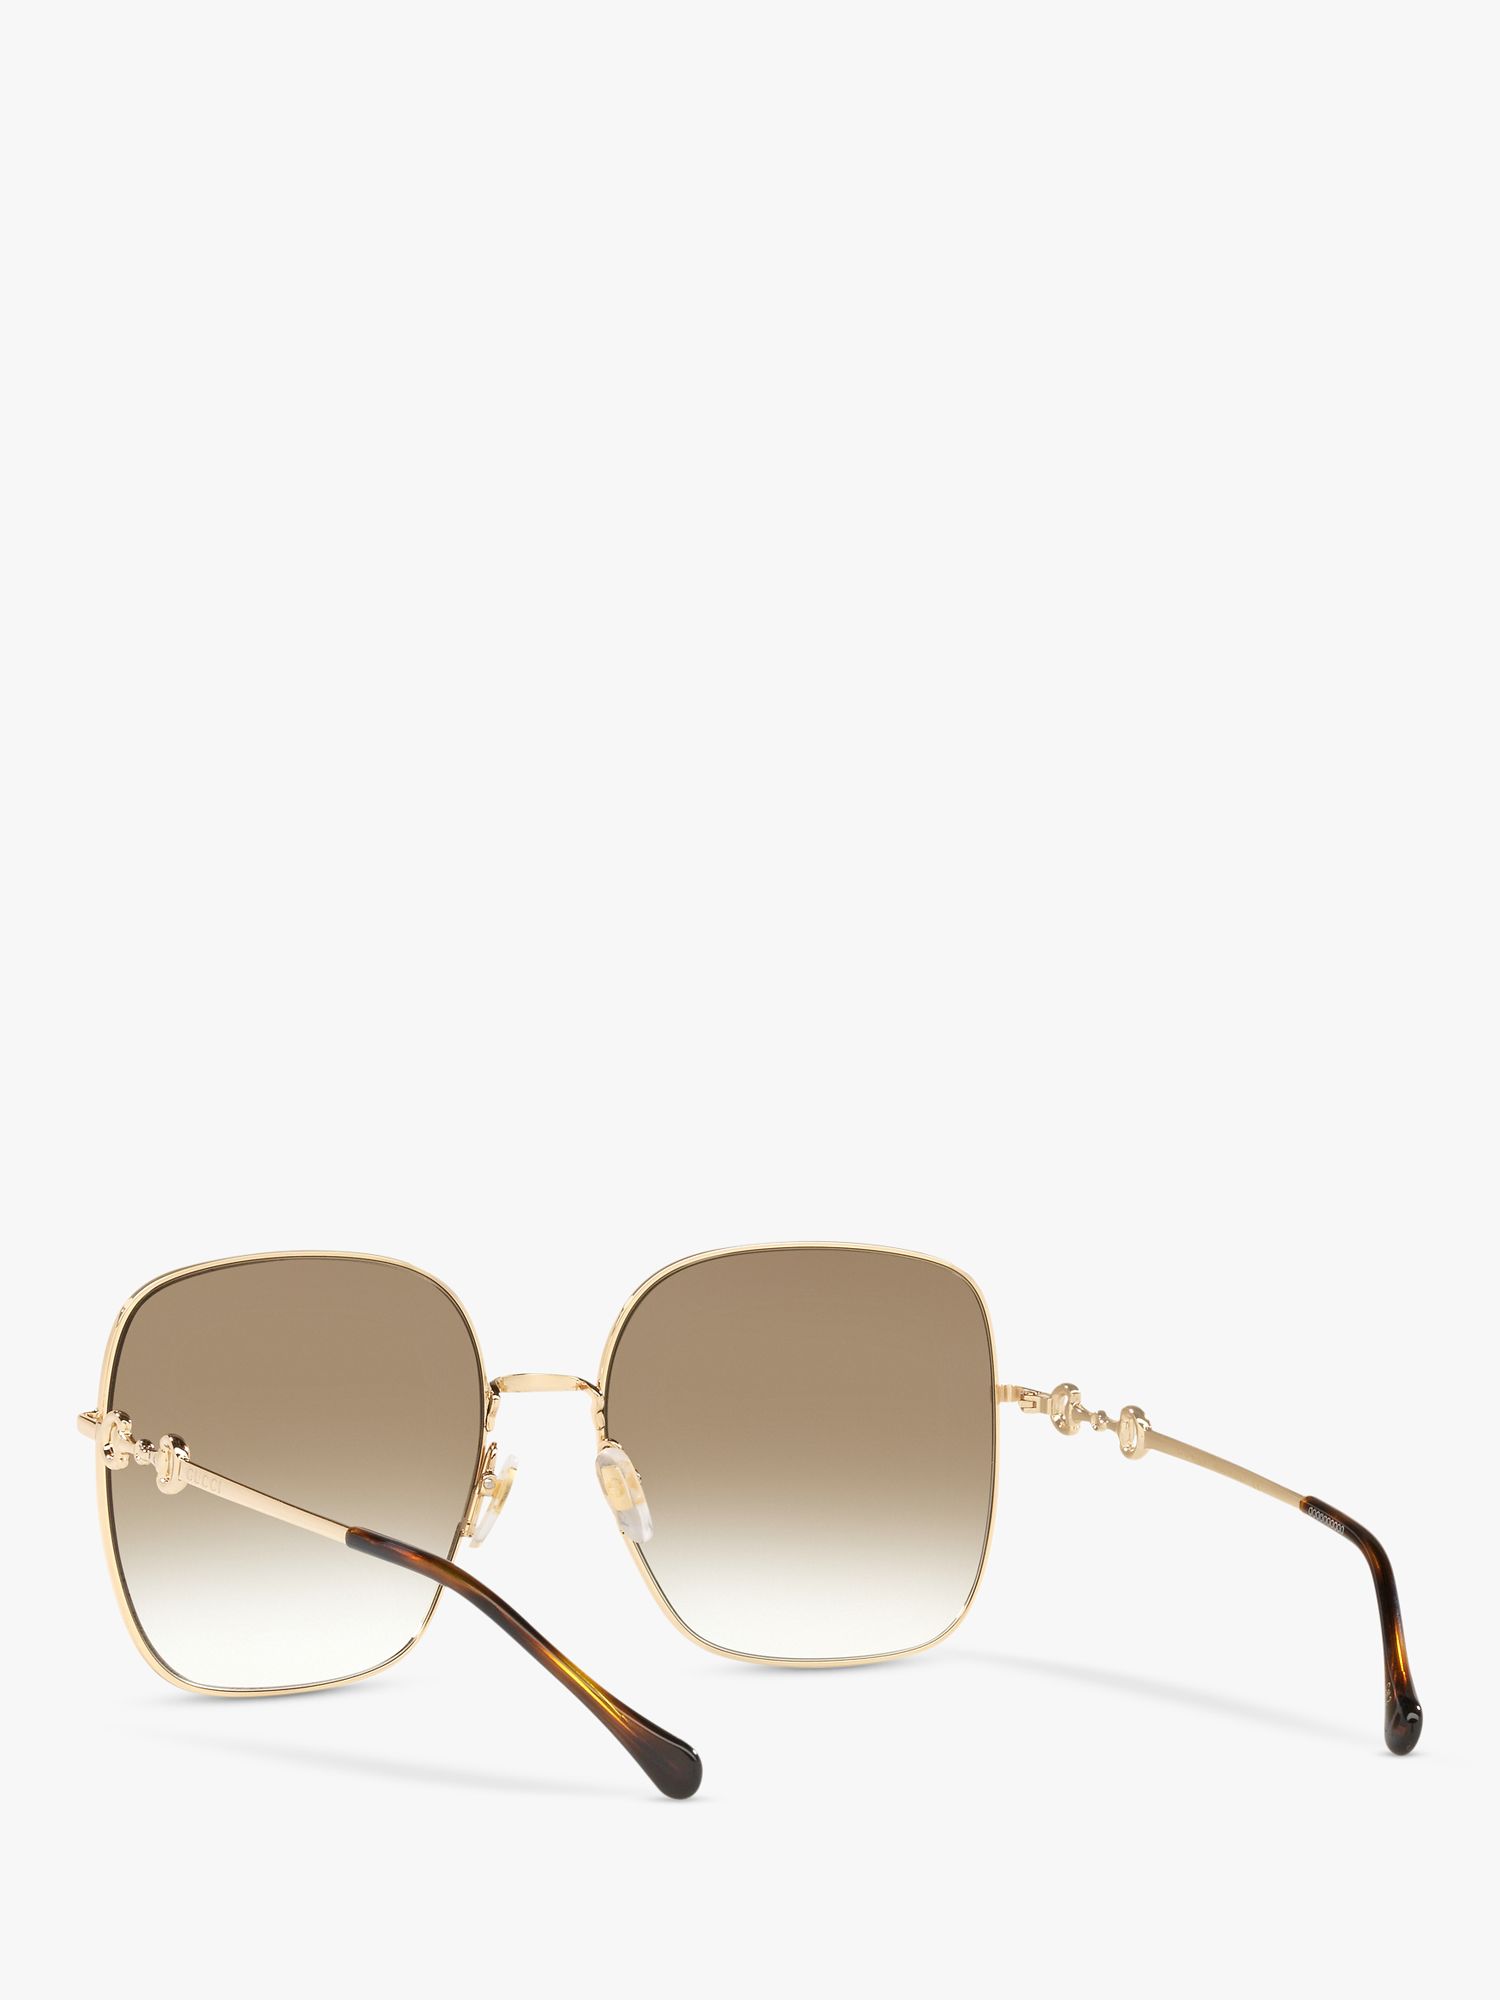 Gucci Square Sunglasses With Rainbow Glasses in Metallic